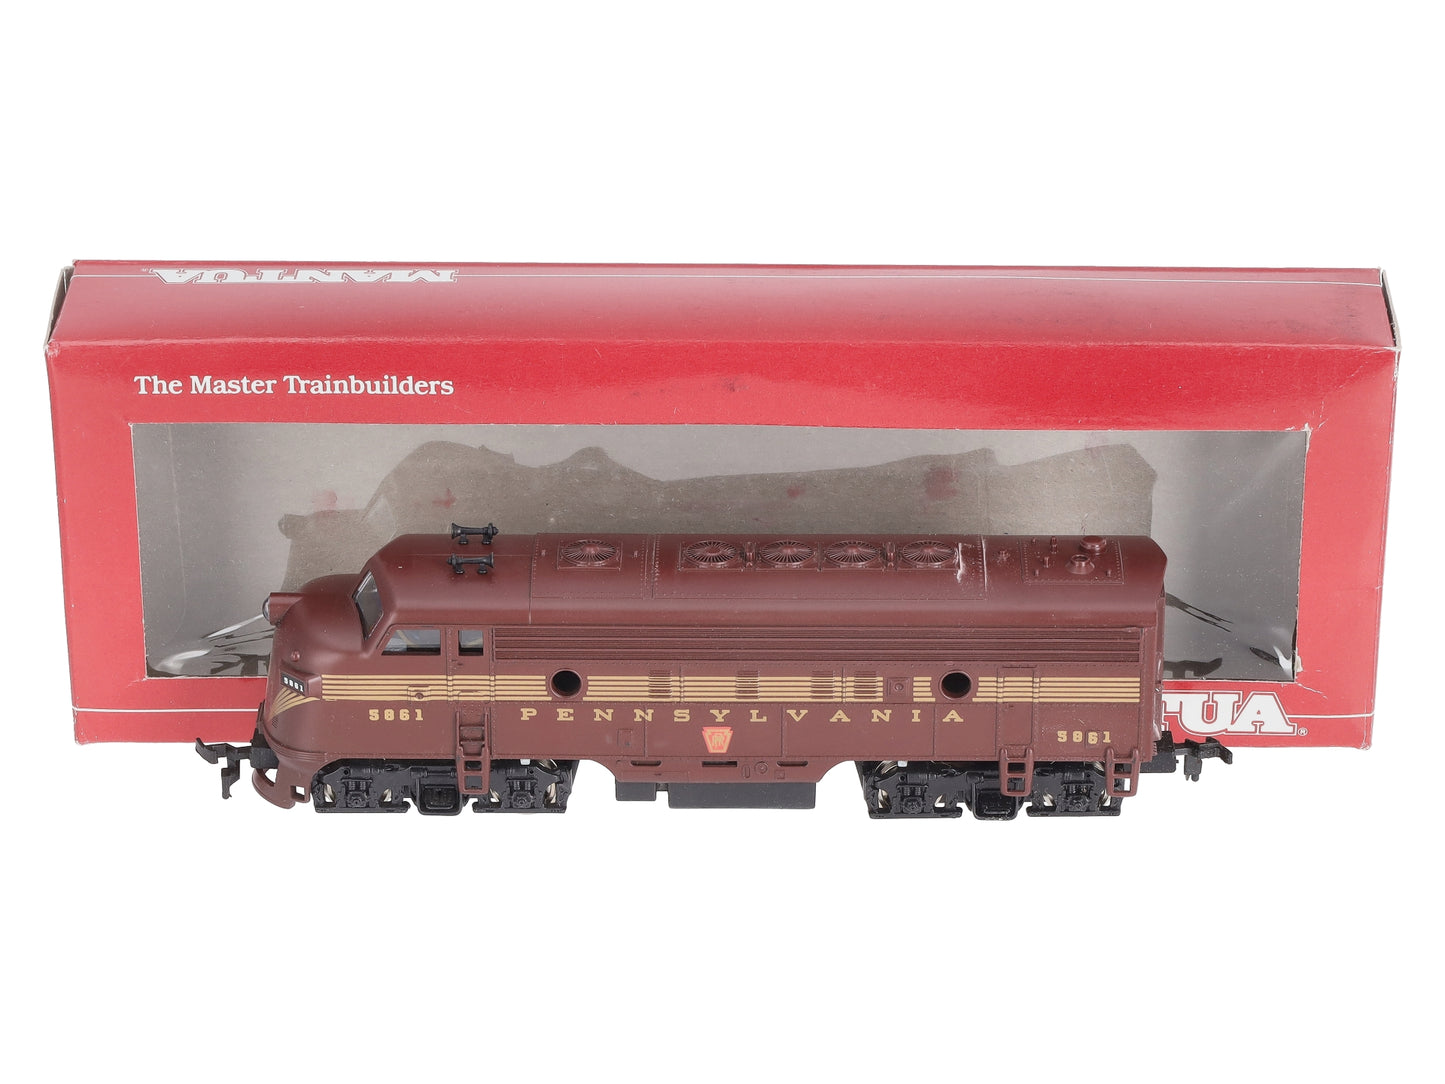 Mantua 413-181 HO Pennsylvania F7-A Diesel Locomotive #5861 EX/Box